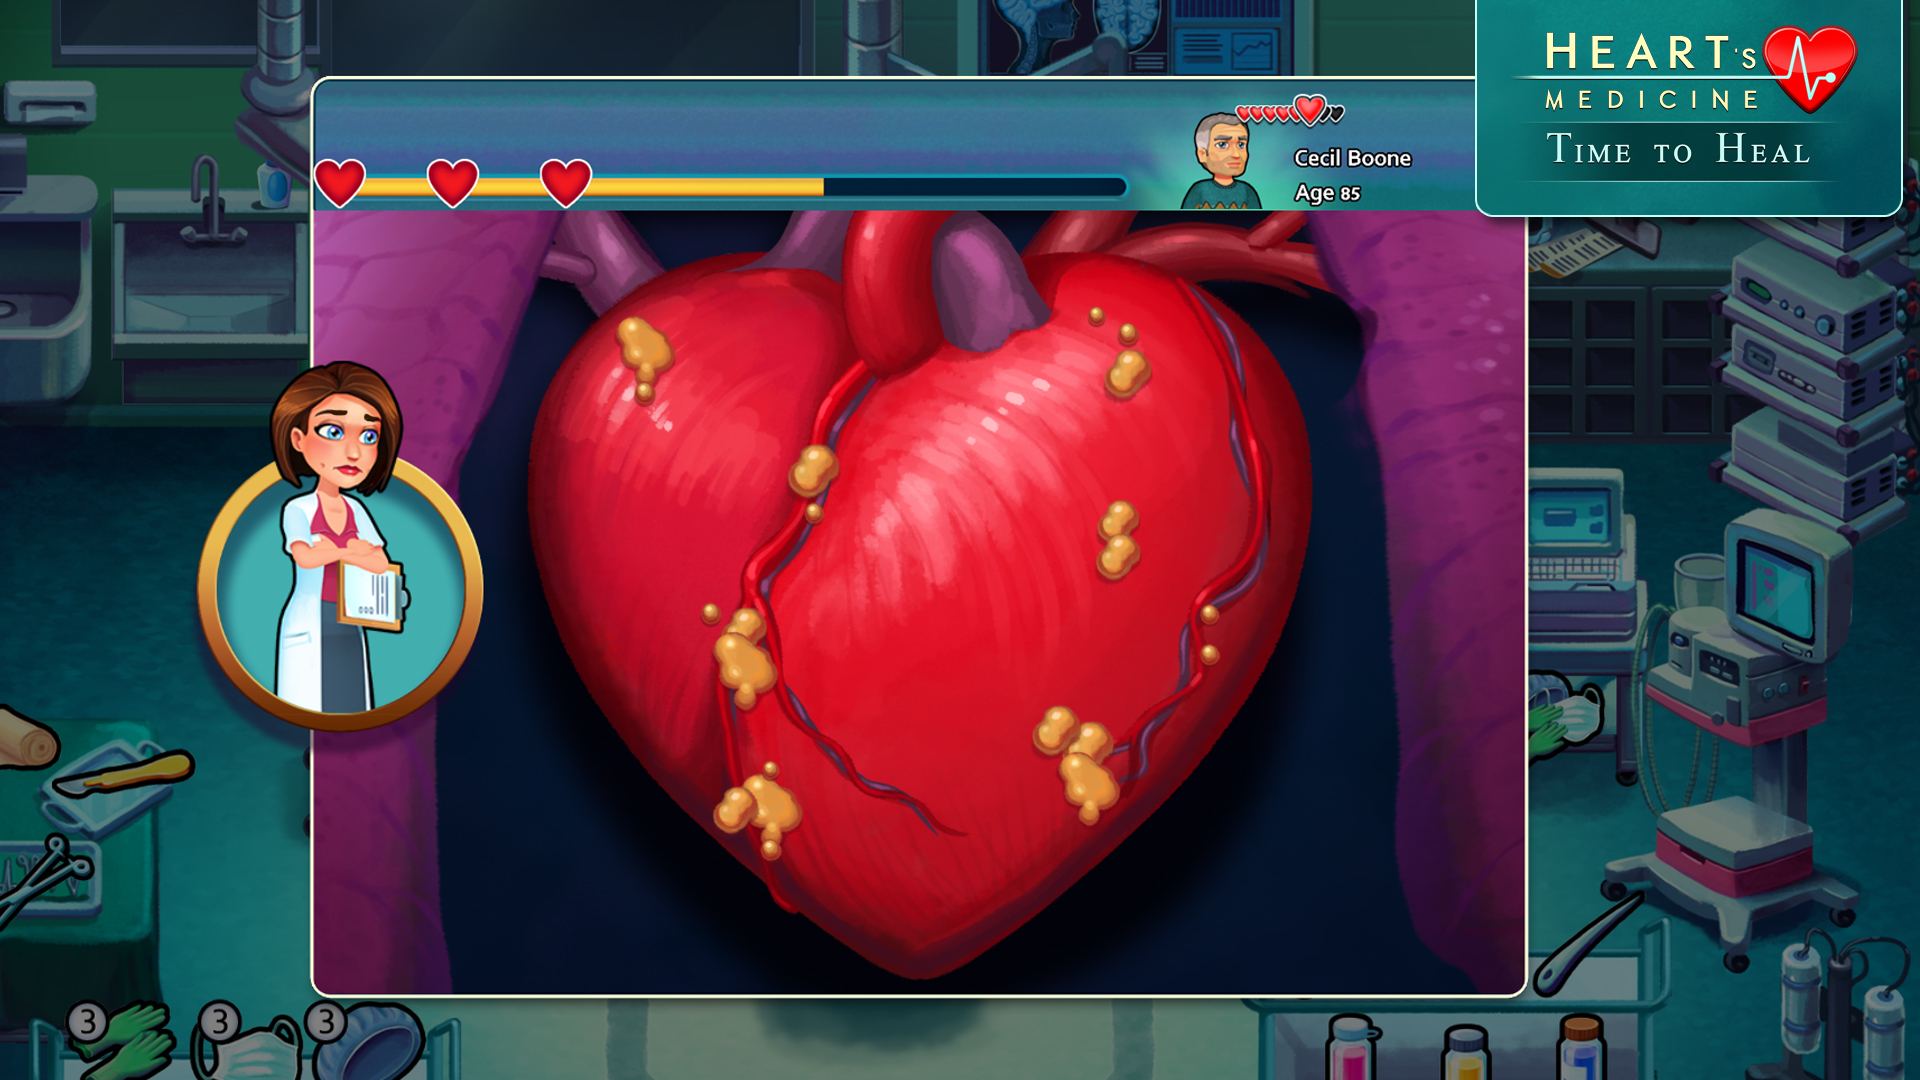 Heart's Medicine - Time to Heal screenshot